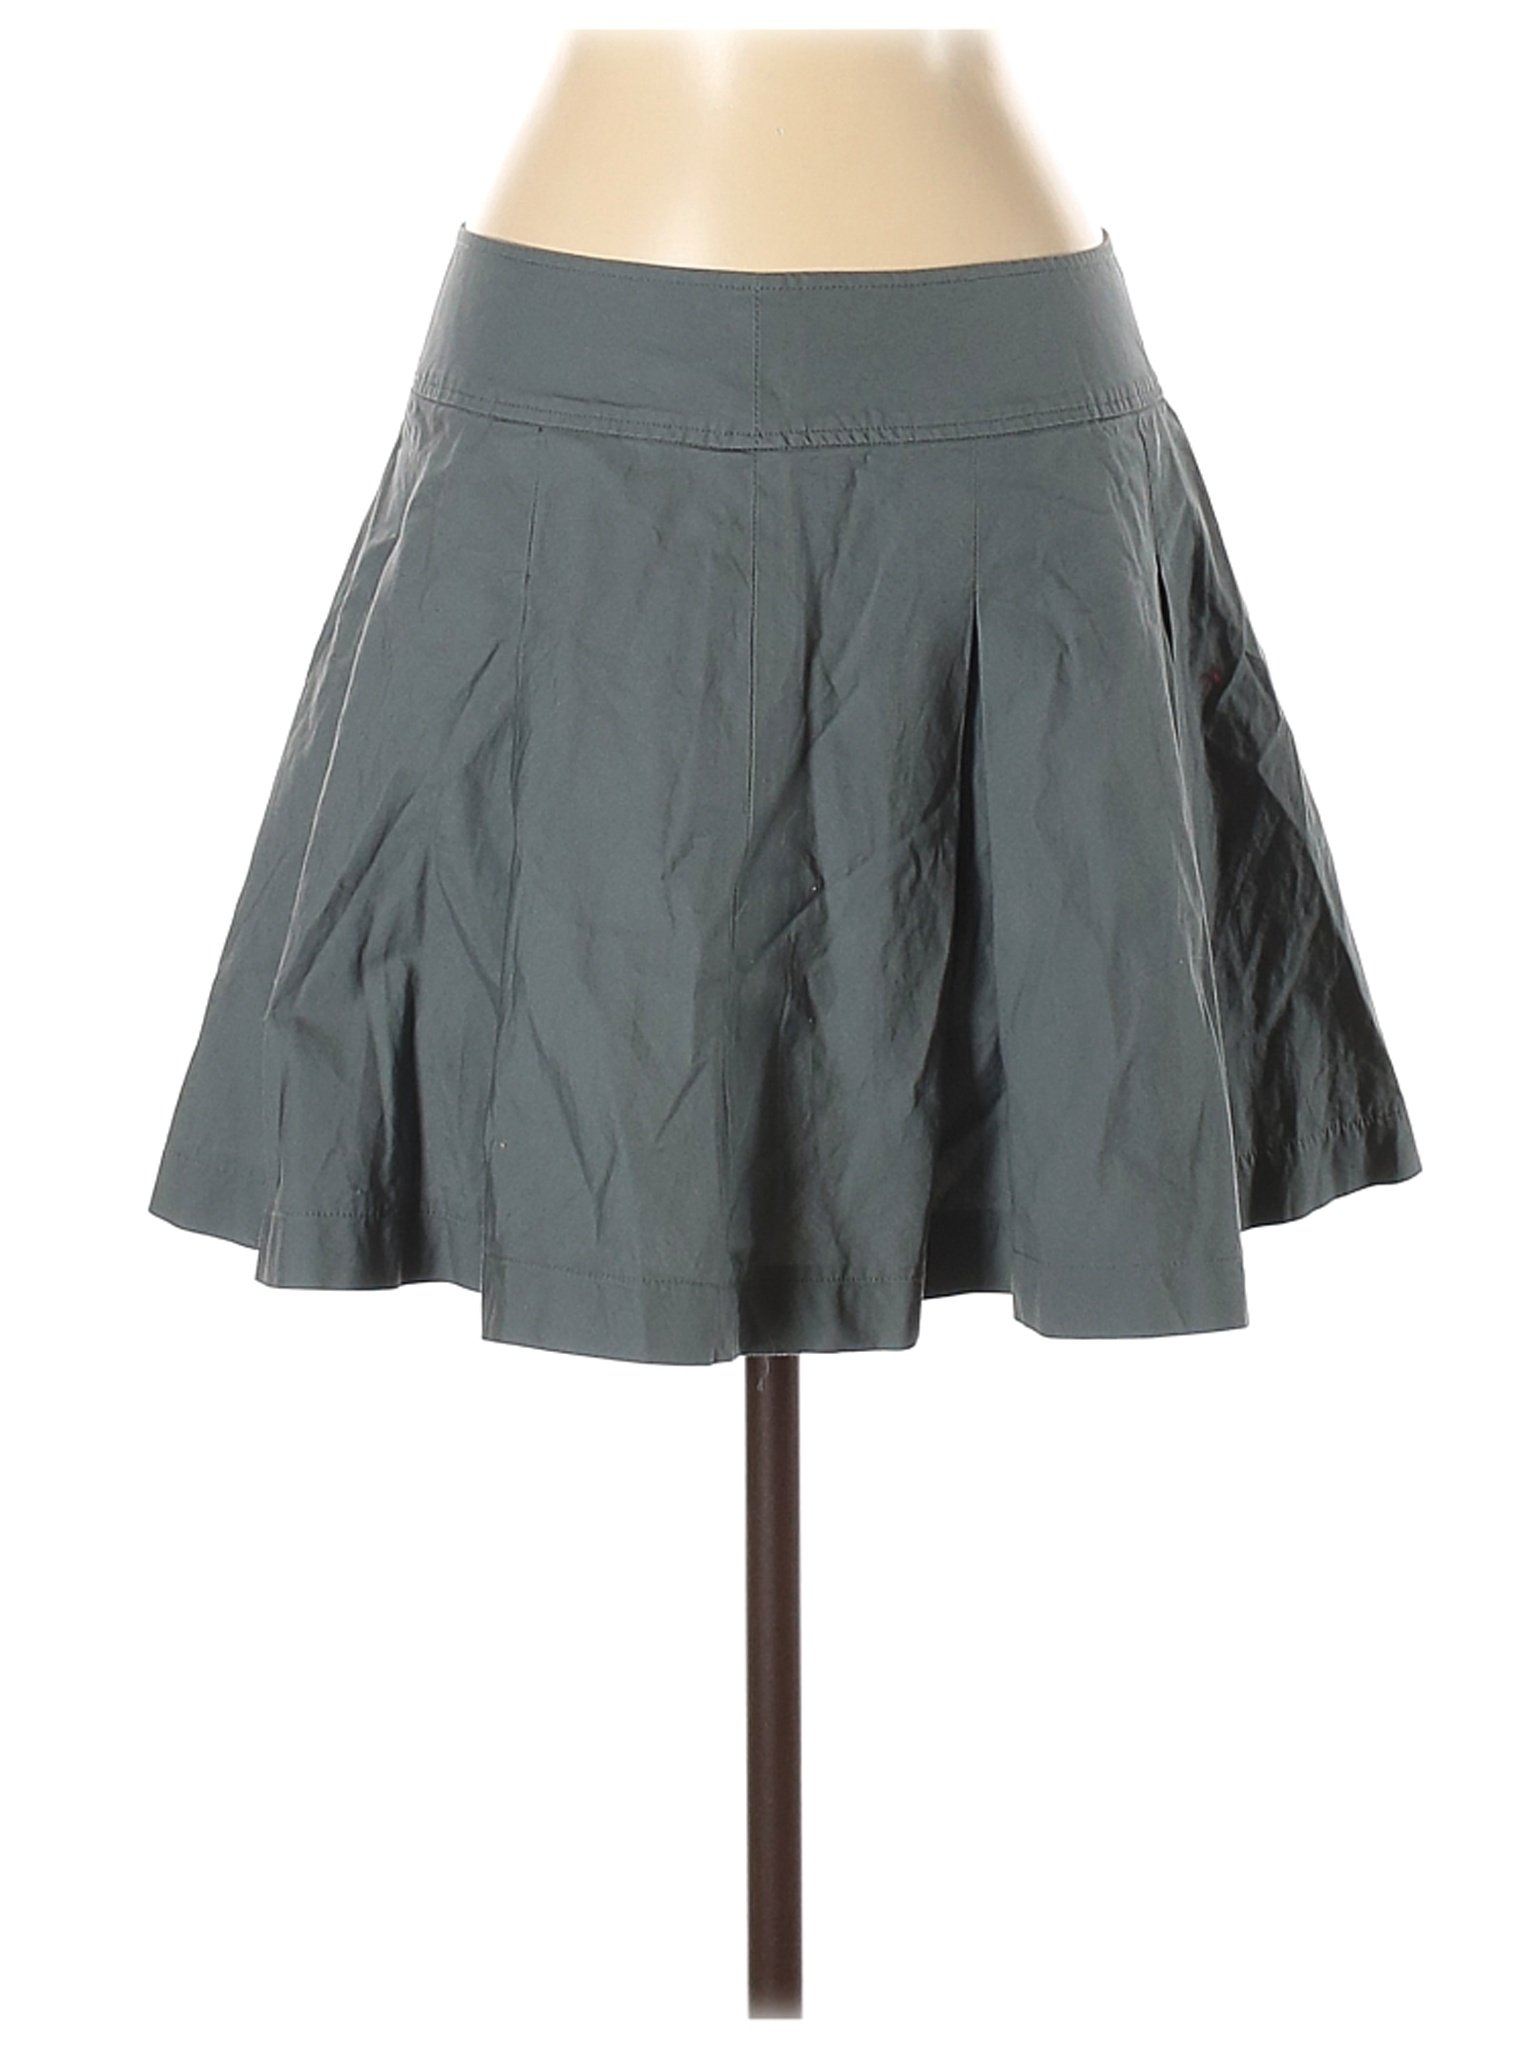 Uniqlo Women Gray Casual Skirt 4 | eBay